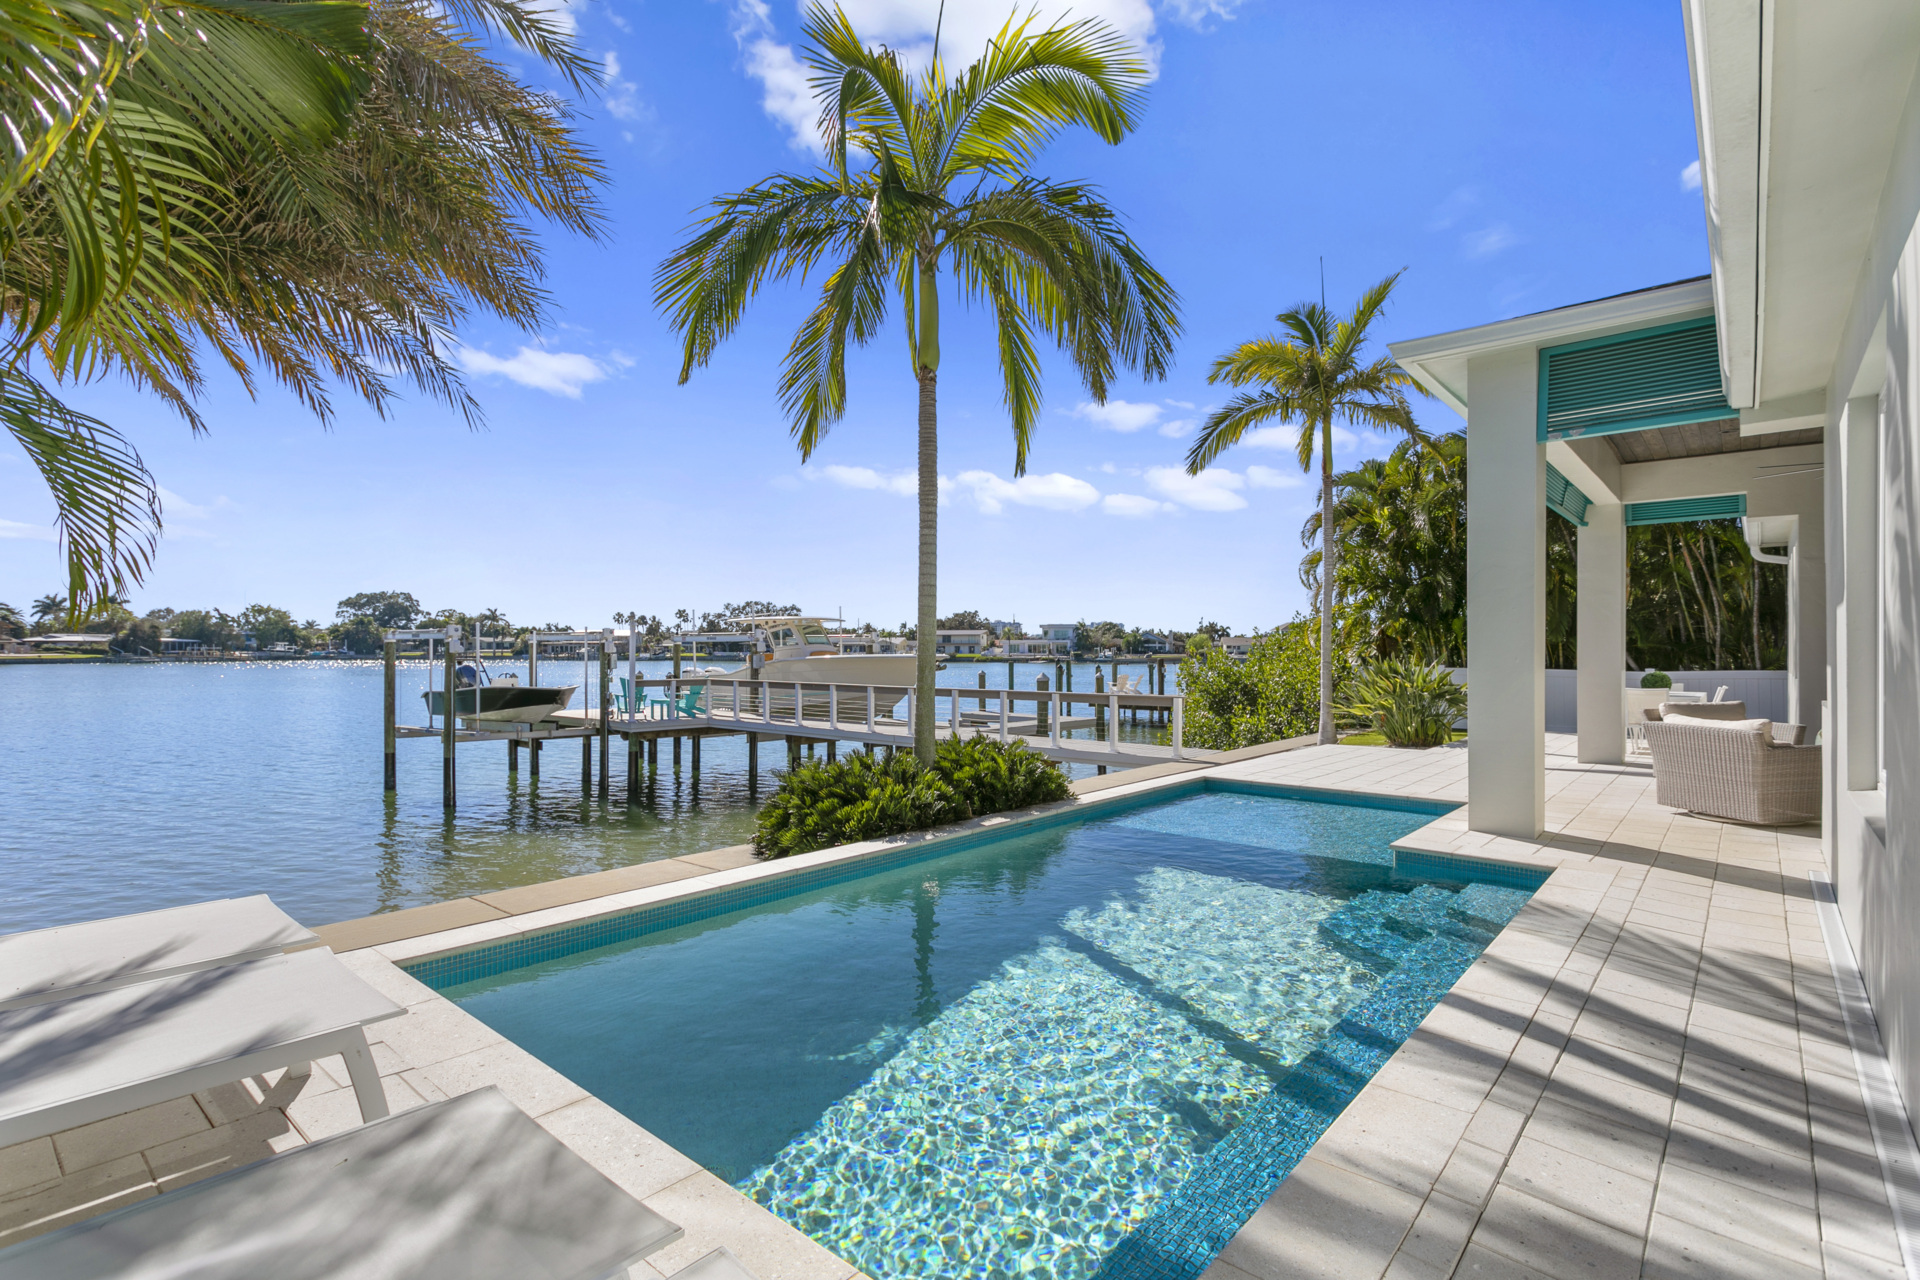 Tampa Bay Luxury Homes Condos Luxury Florida Real Estate